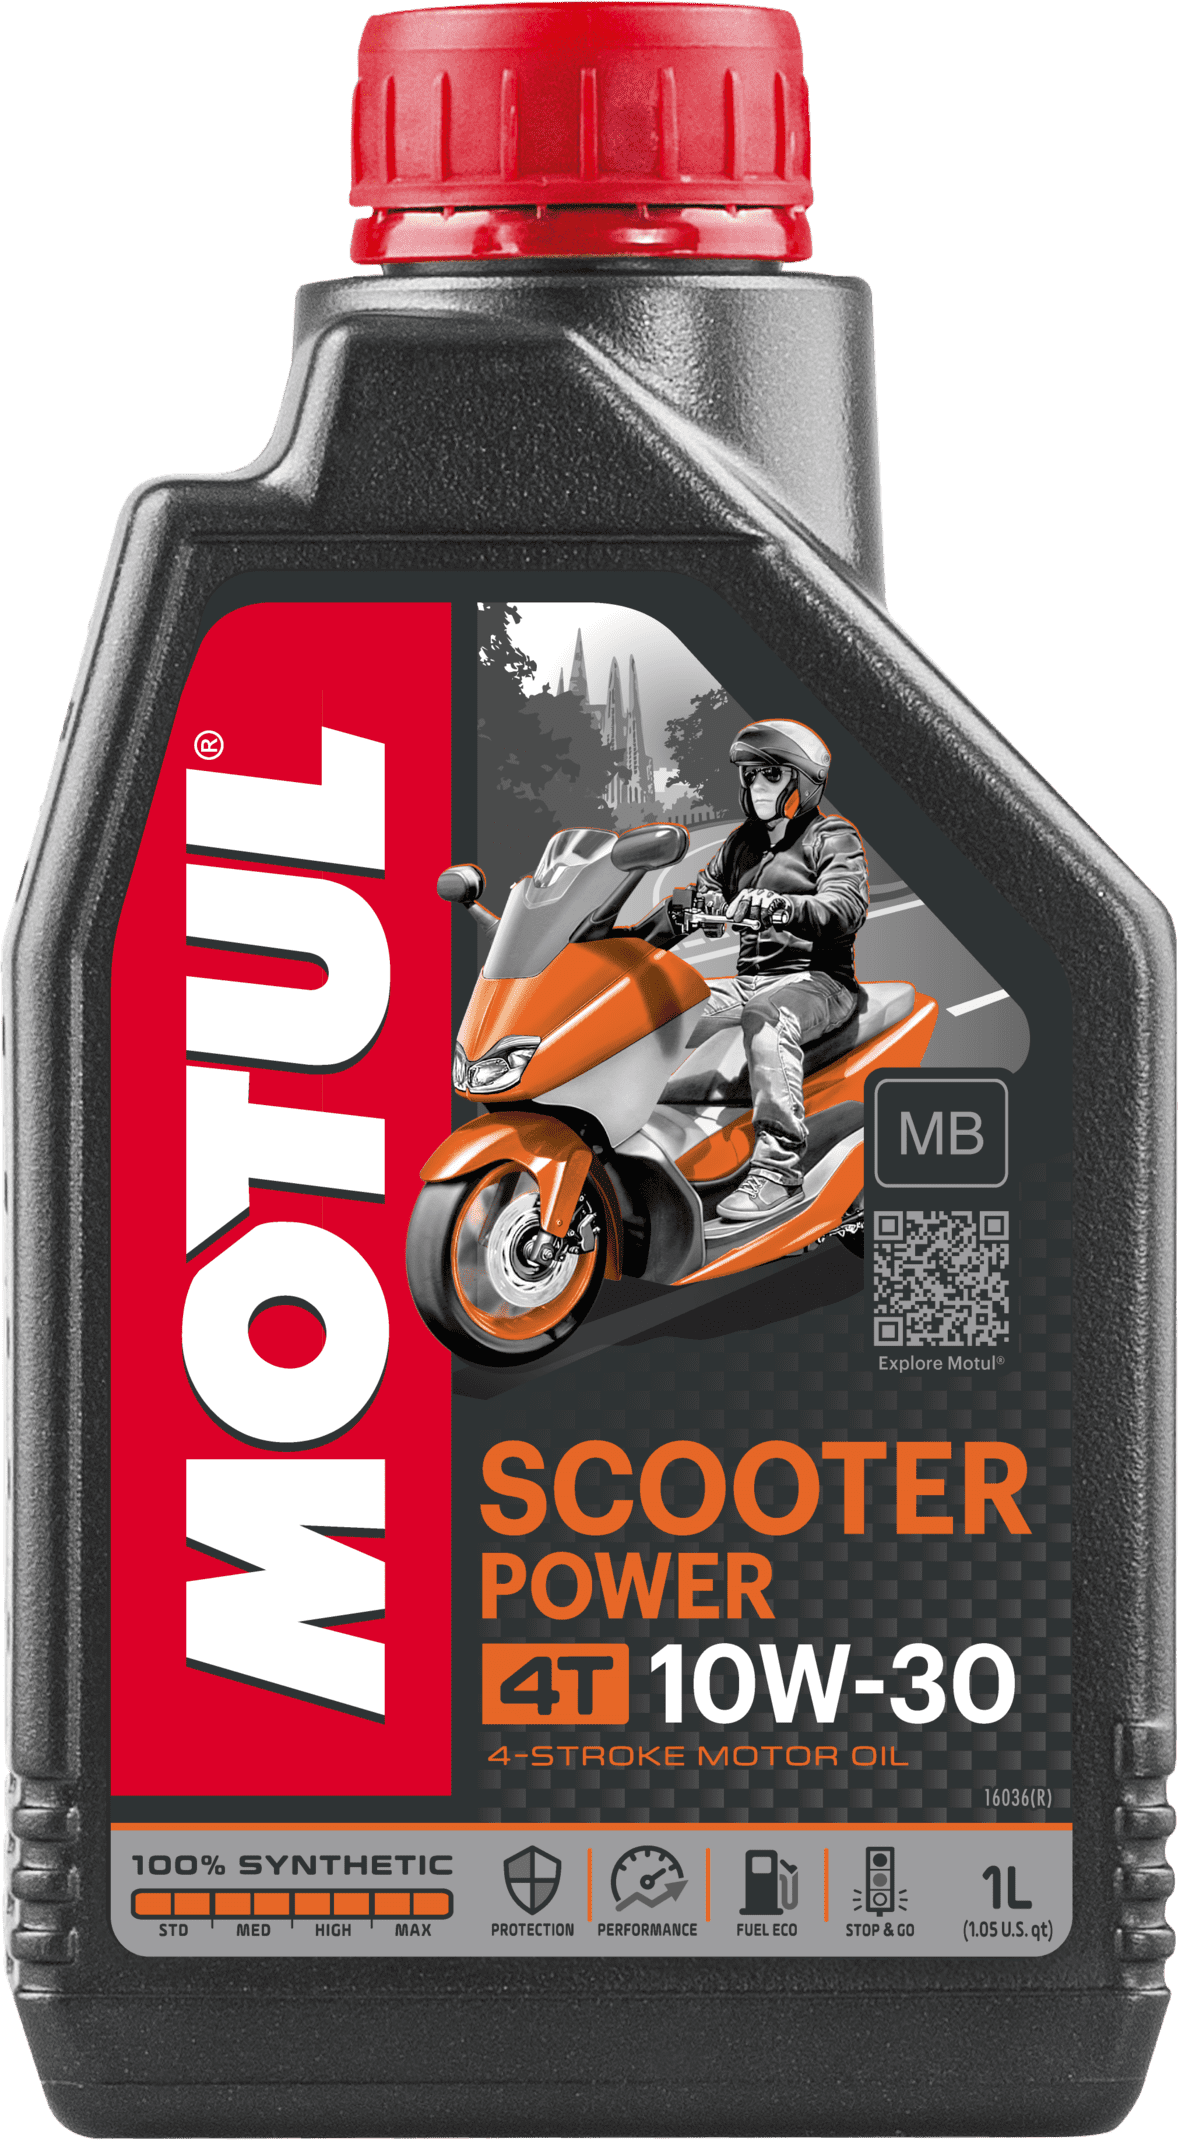 Motul Scooter Power 4T 10W-30 MB, 1 lt